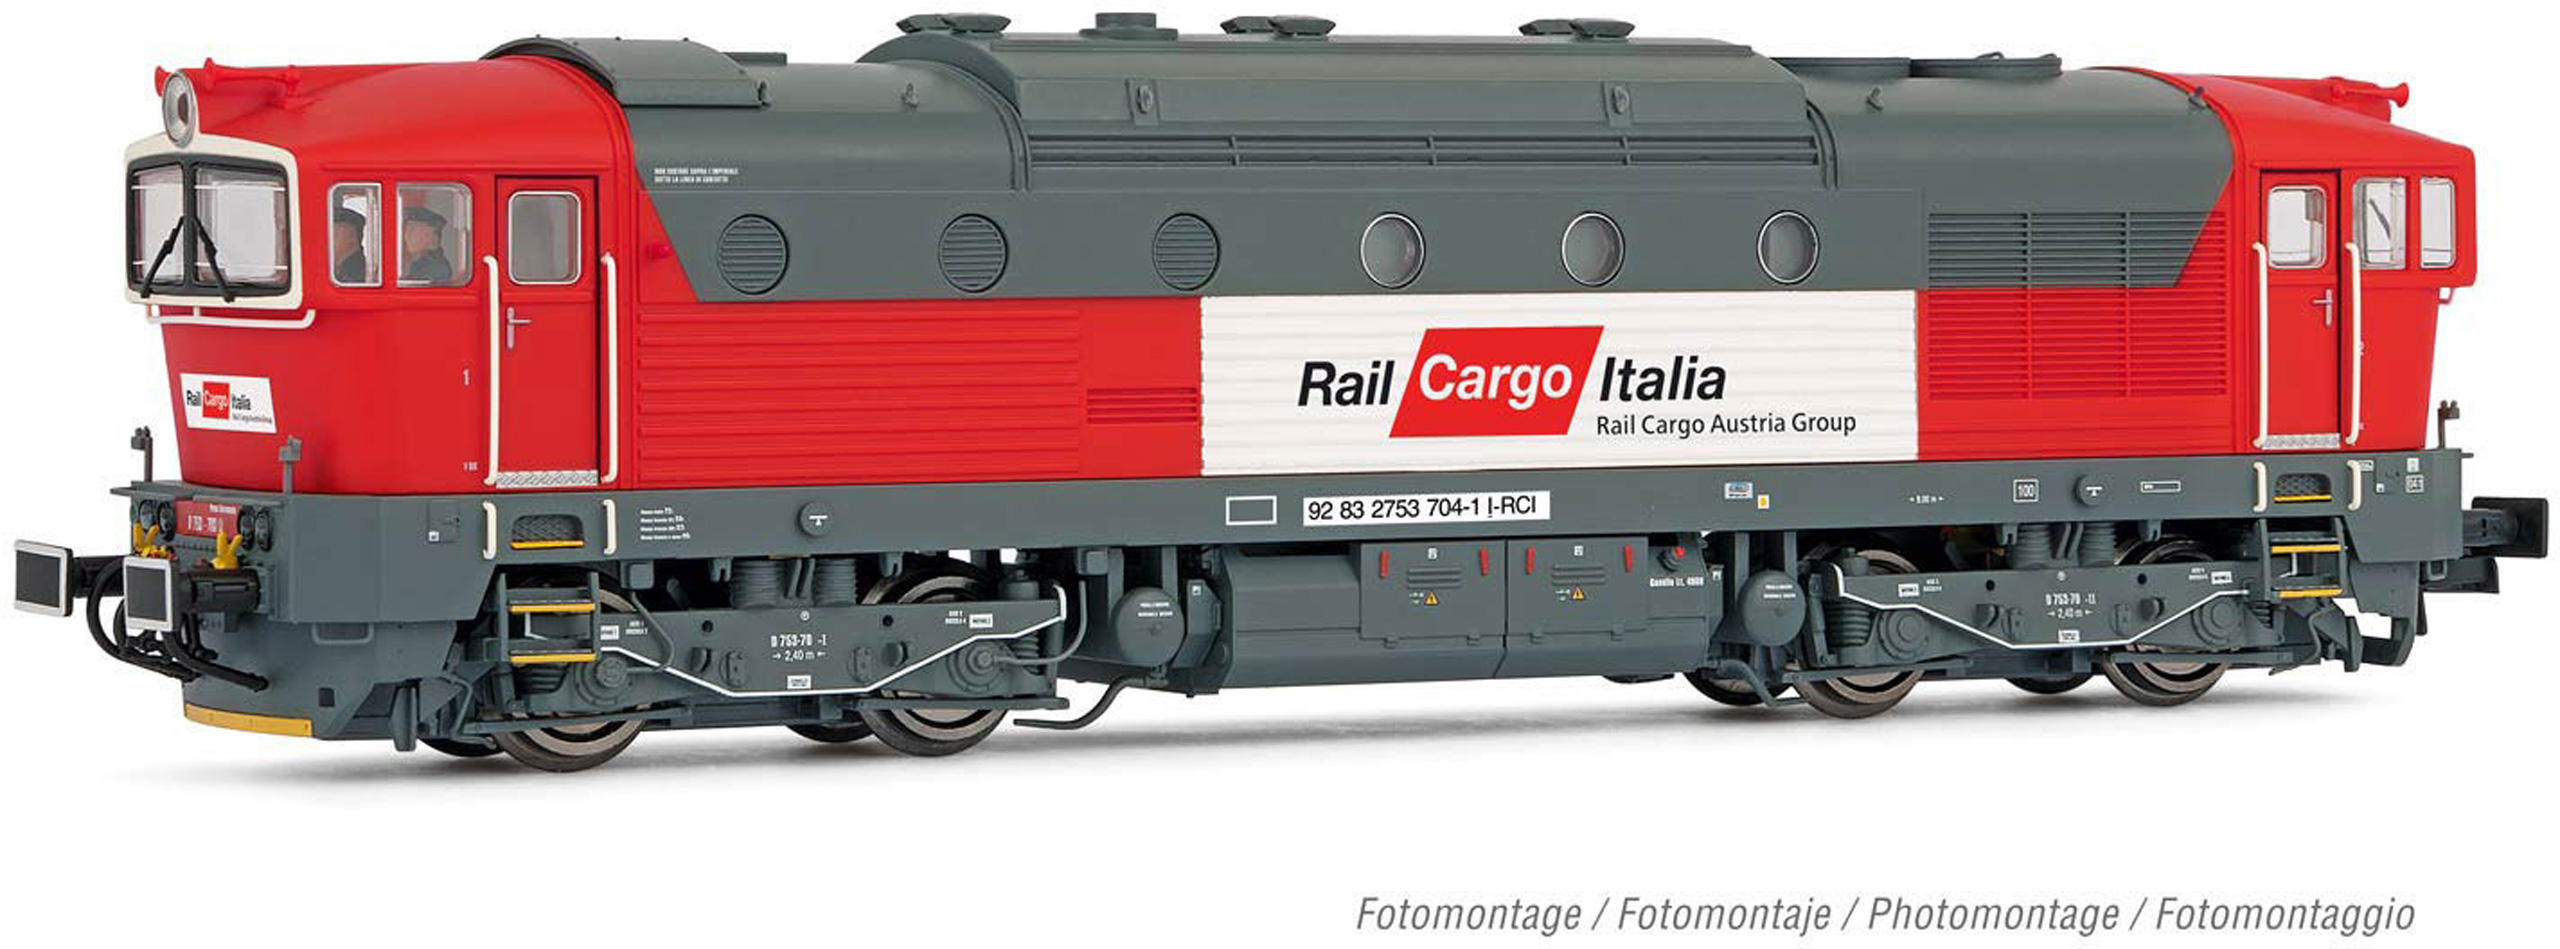 HORNBY HR2863S LODO DIESED D753 RAIL CARGO ITALIA SOUND